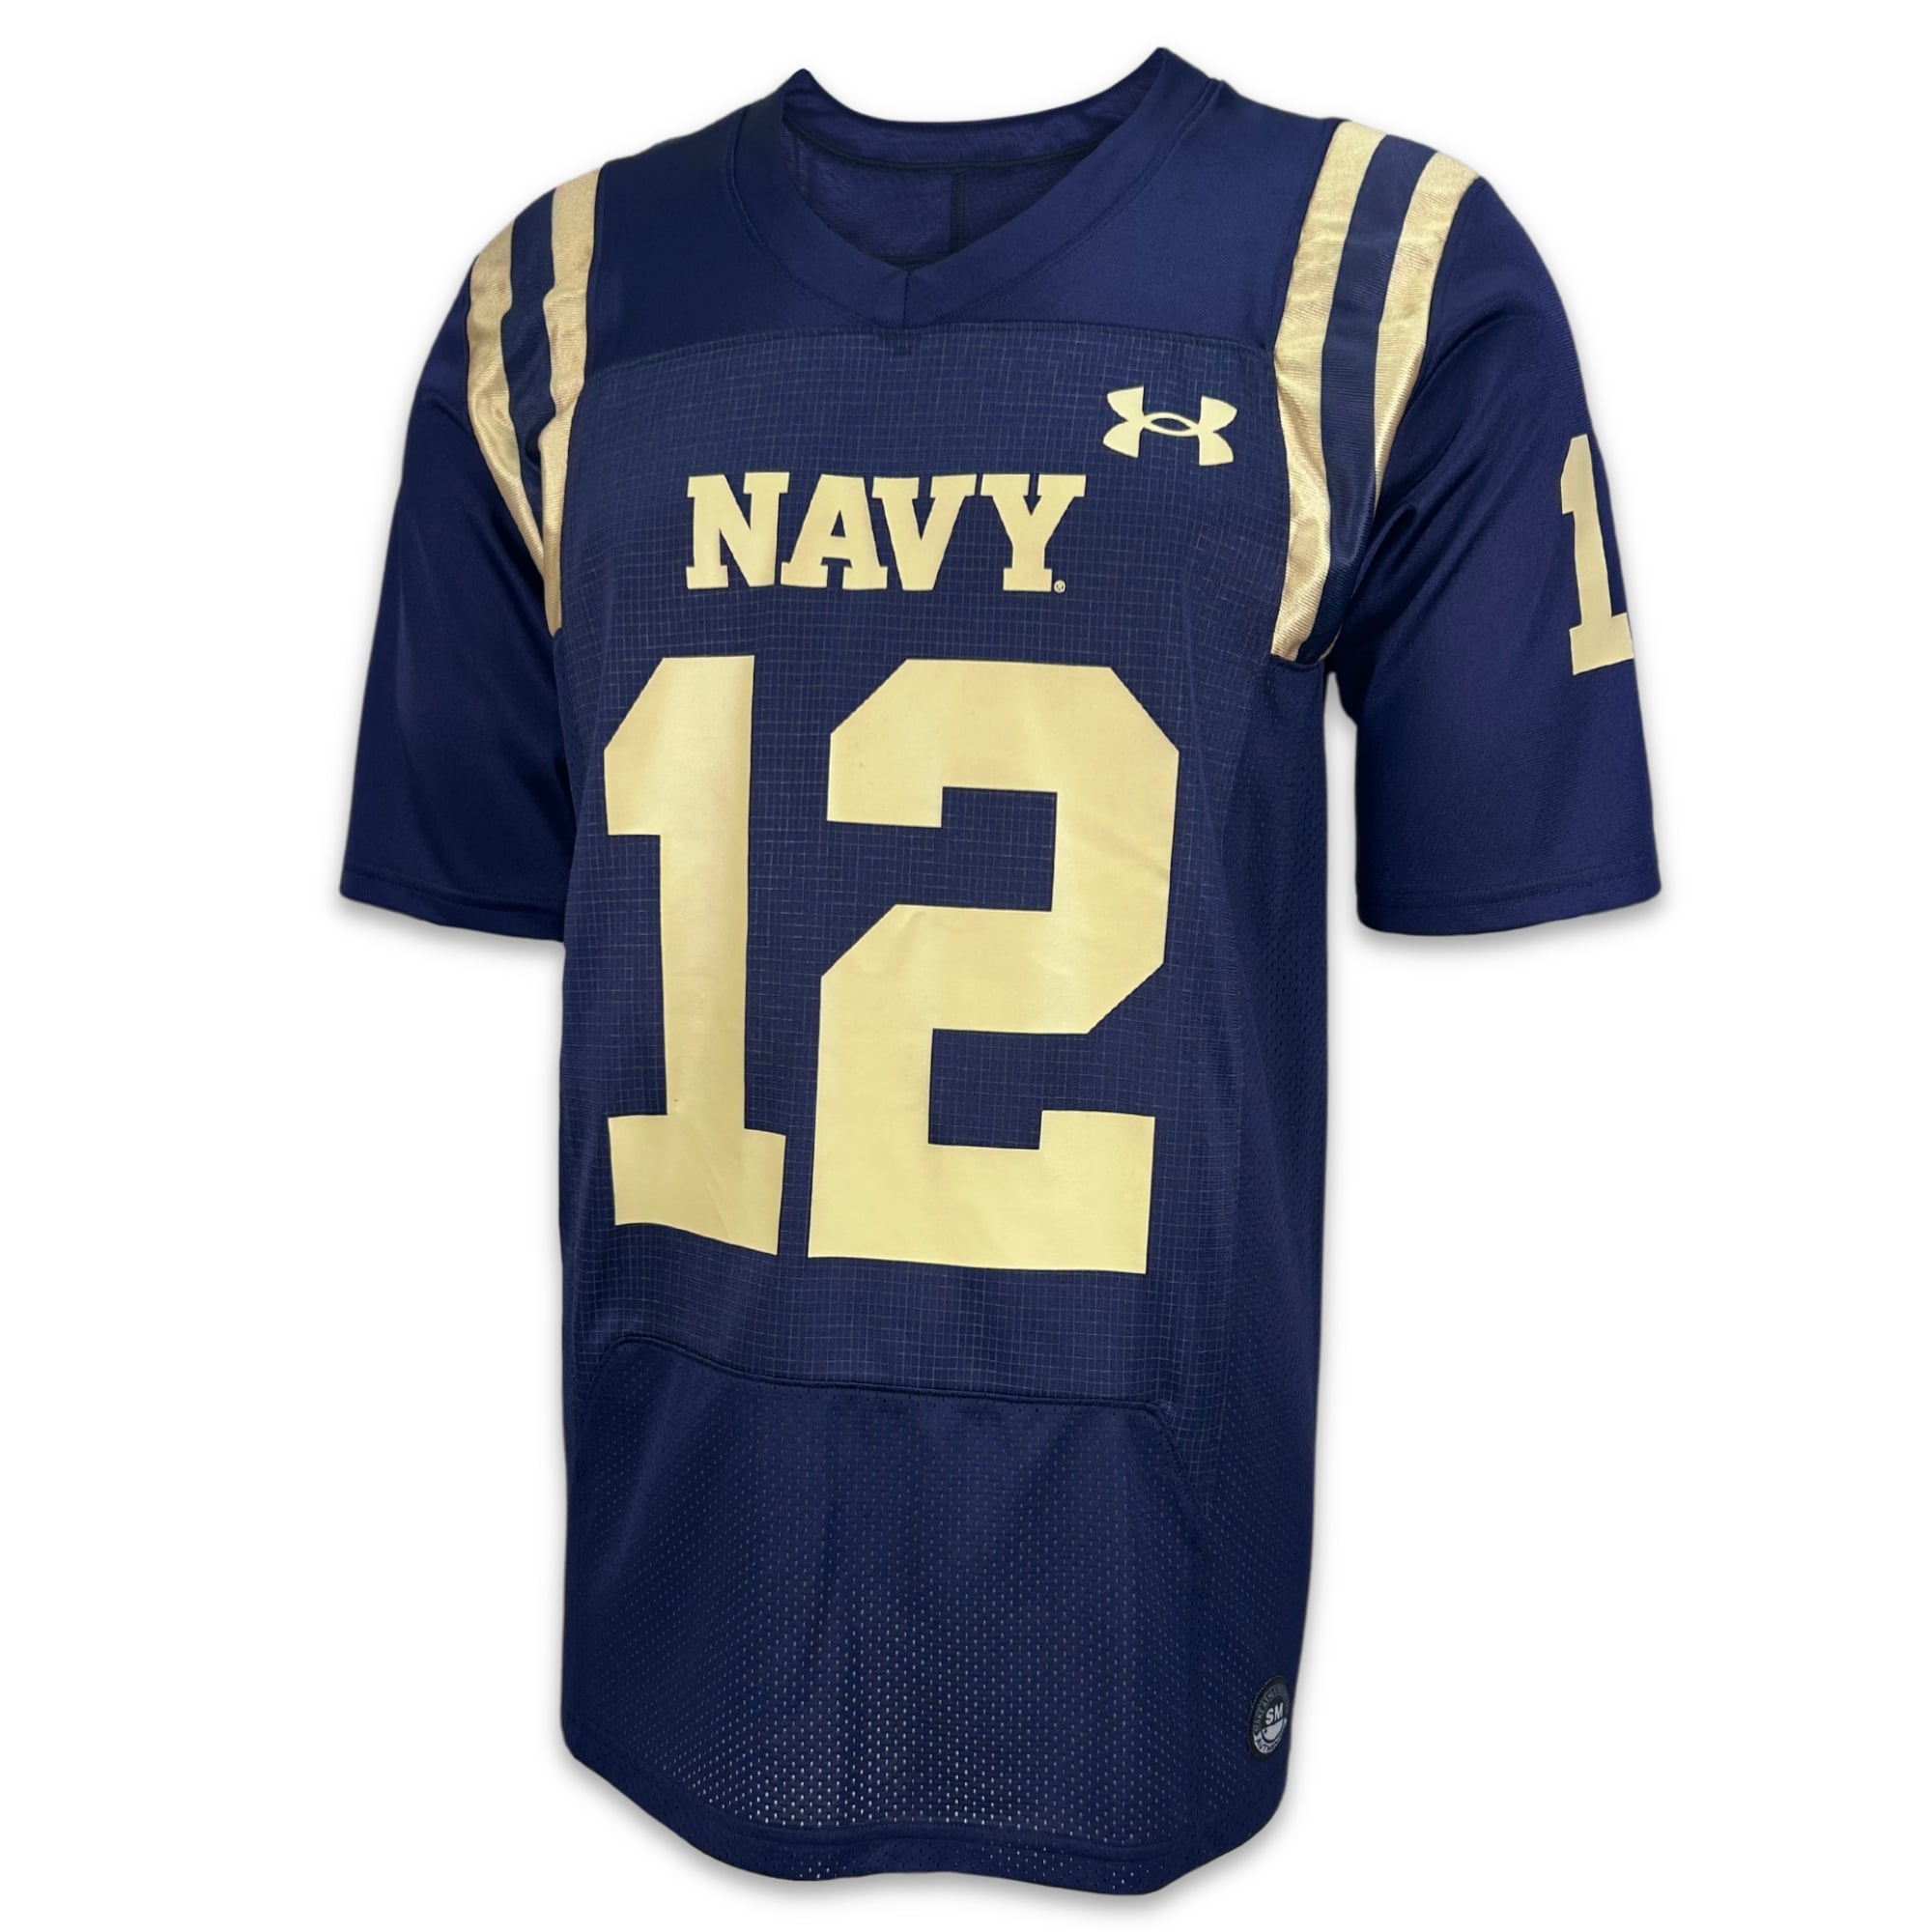 Navy Under Armour Sideline Replica #12 Football Jersey (Navy), 2XL